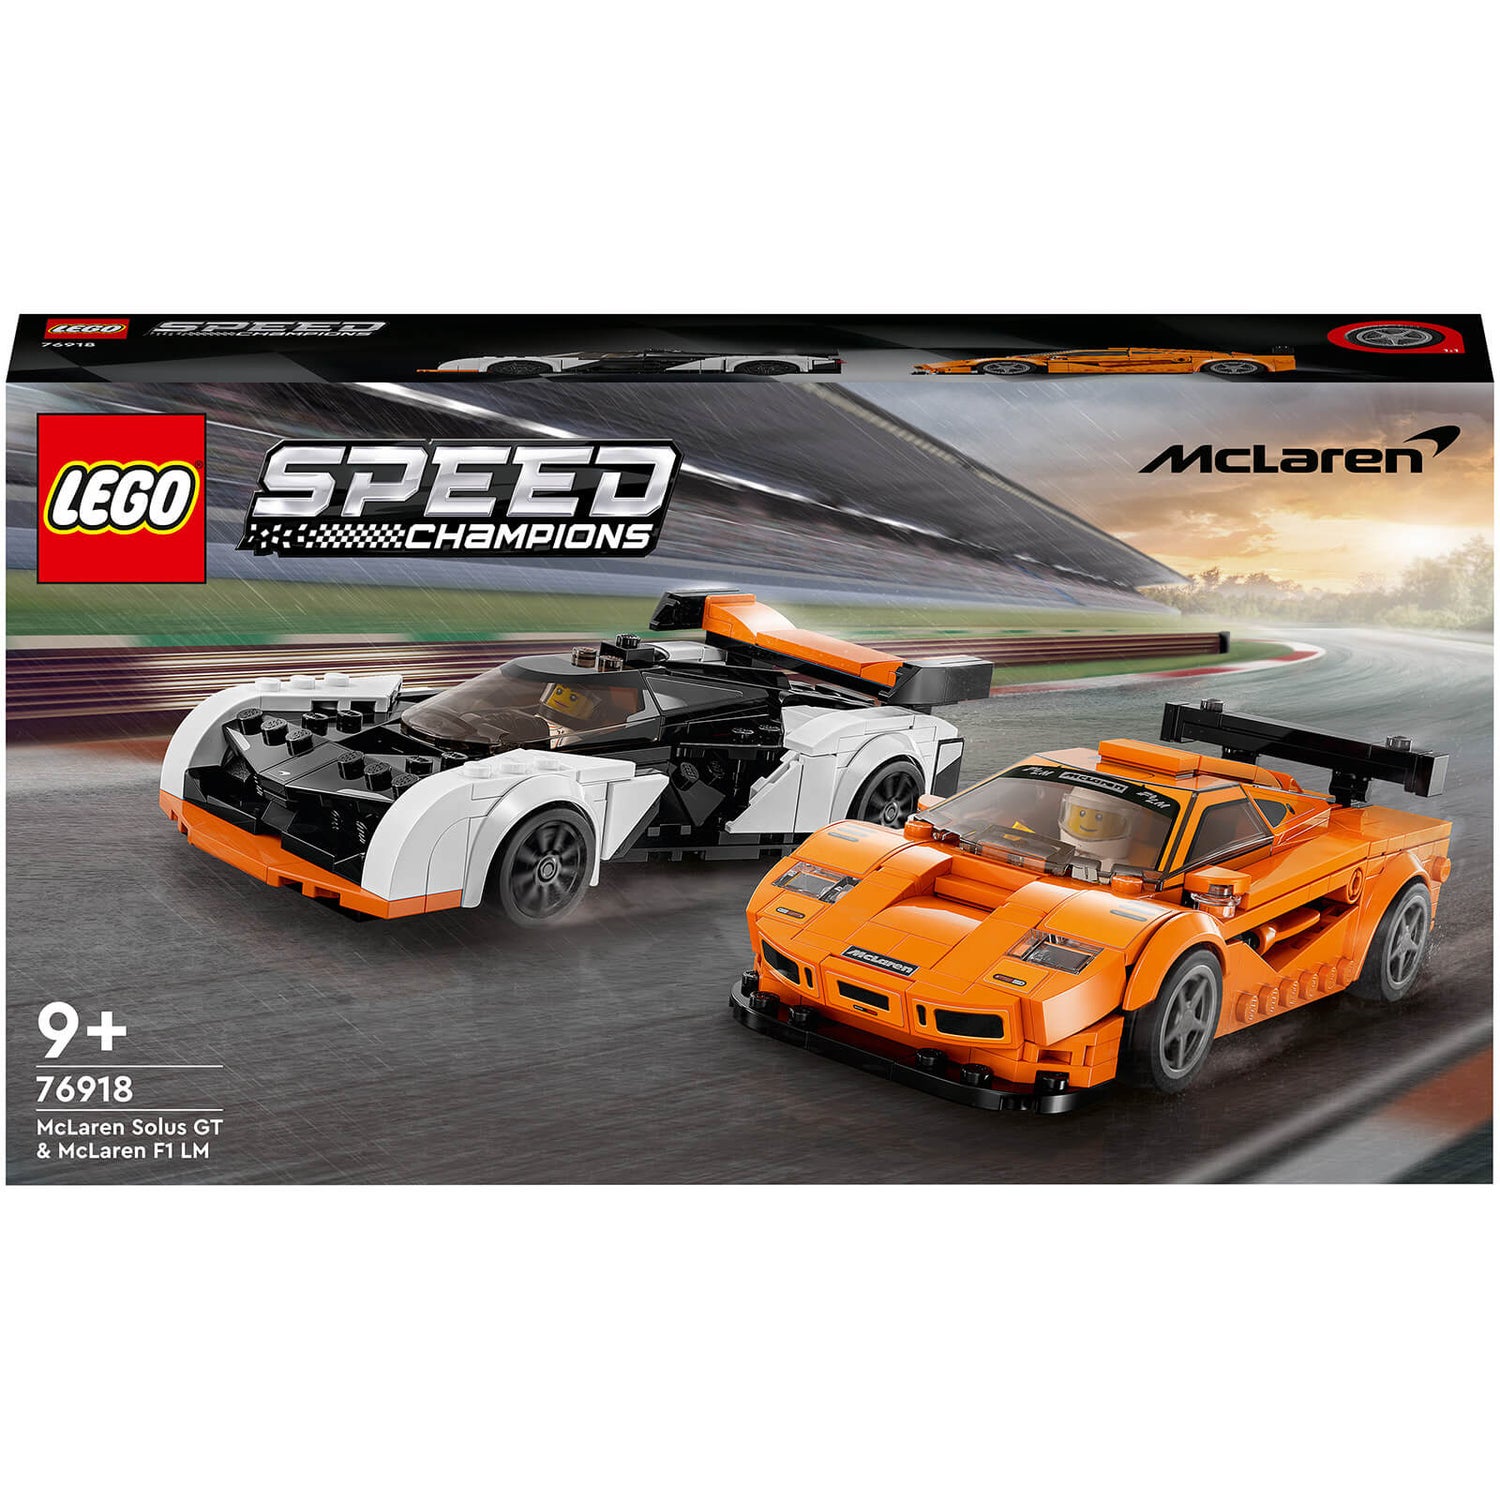 LEGO Speed Champions: McLaren Solus GT & McLaren F1 LM (76918)